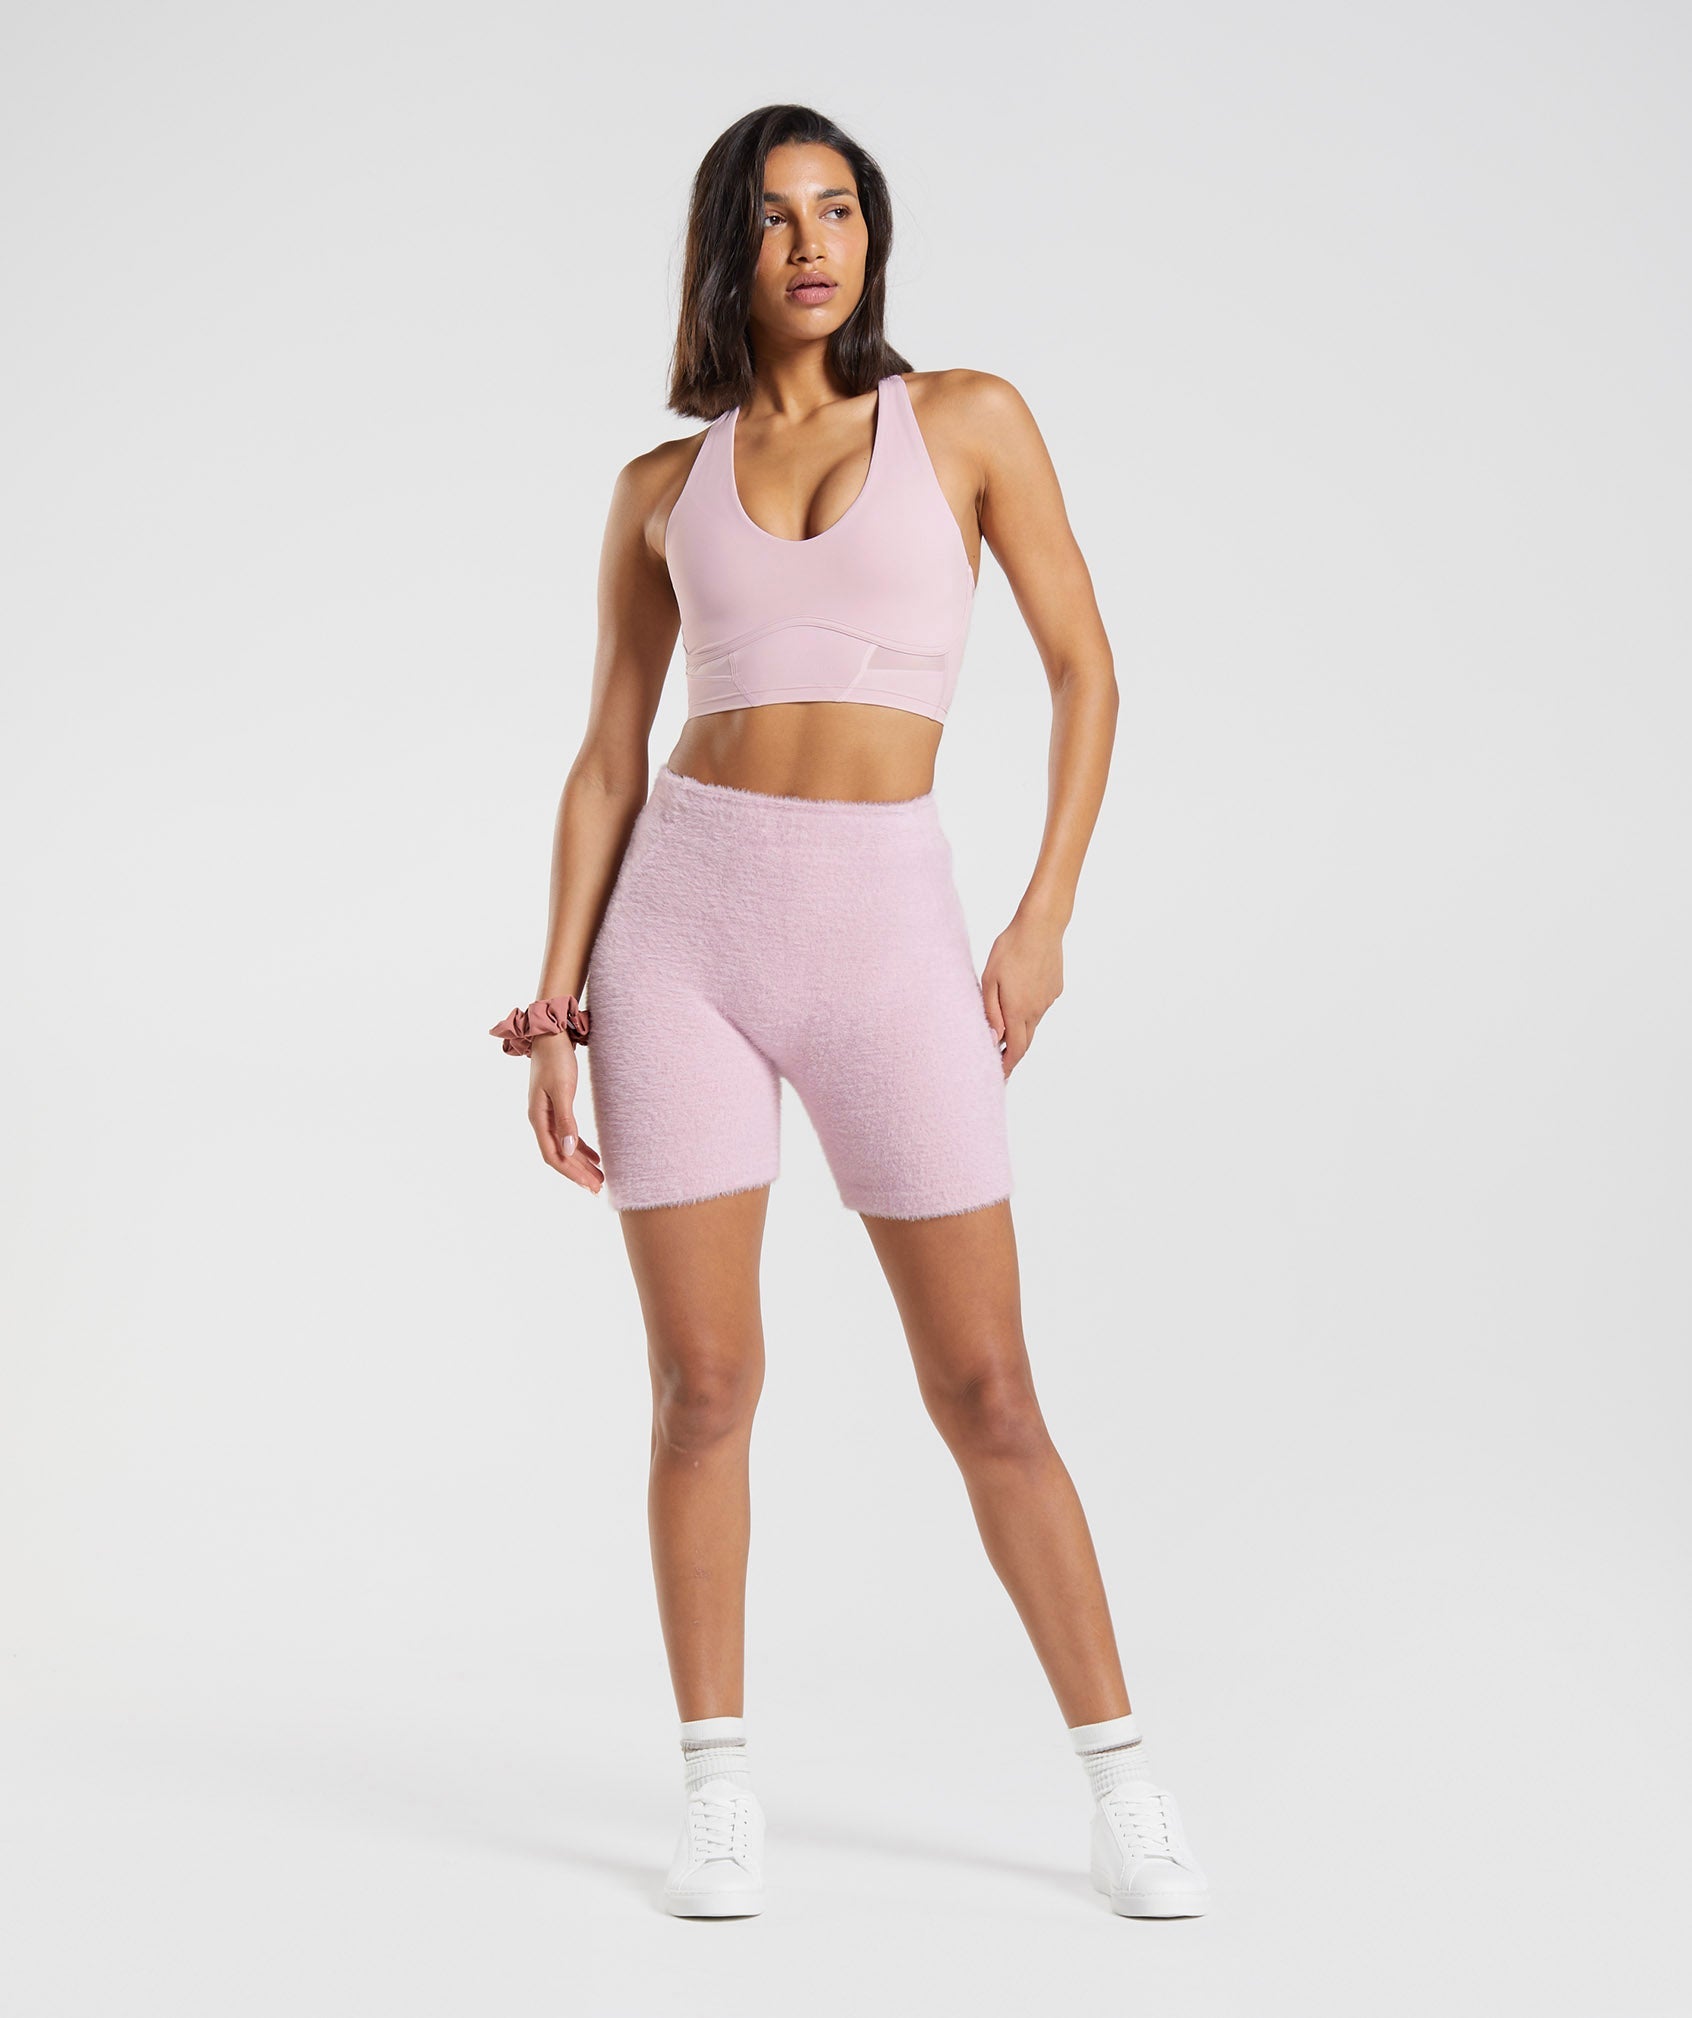 Whitney pink gymshark sports bra Size large New - Depop